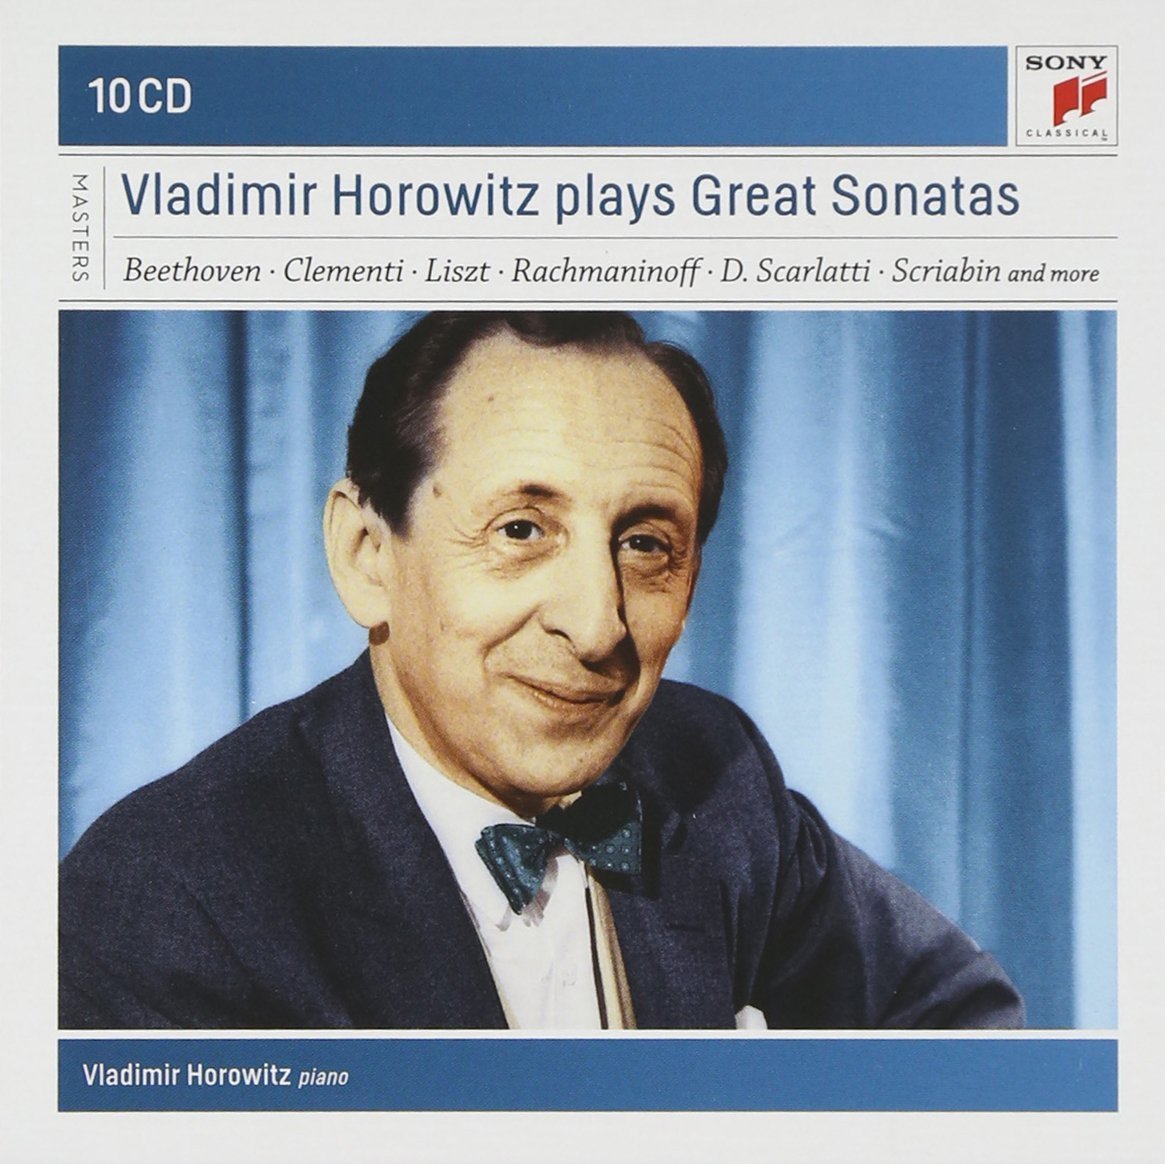 VLADIMIR HOROWITZ PLAYS GREAT SONATAS - Beethoven, Clementi, Liszt, Rachmaninoff, Scarlatti, Scriabin (10 CDs)